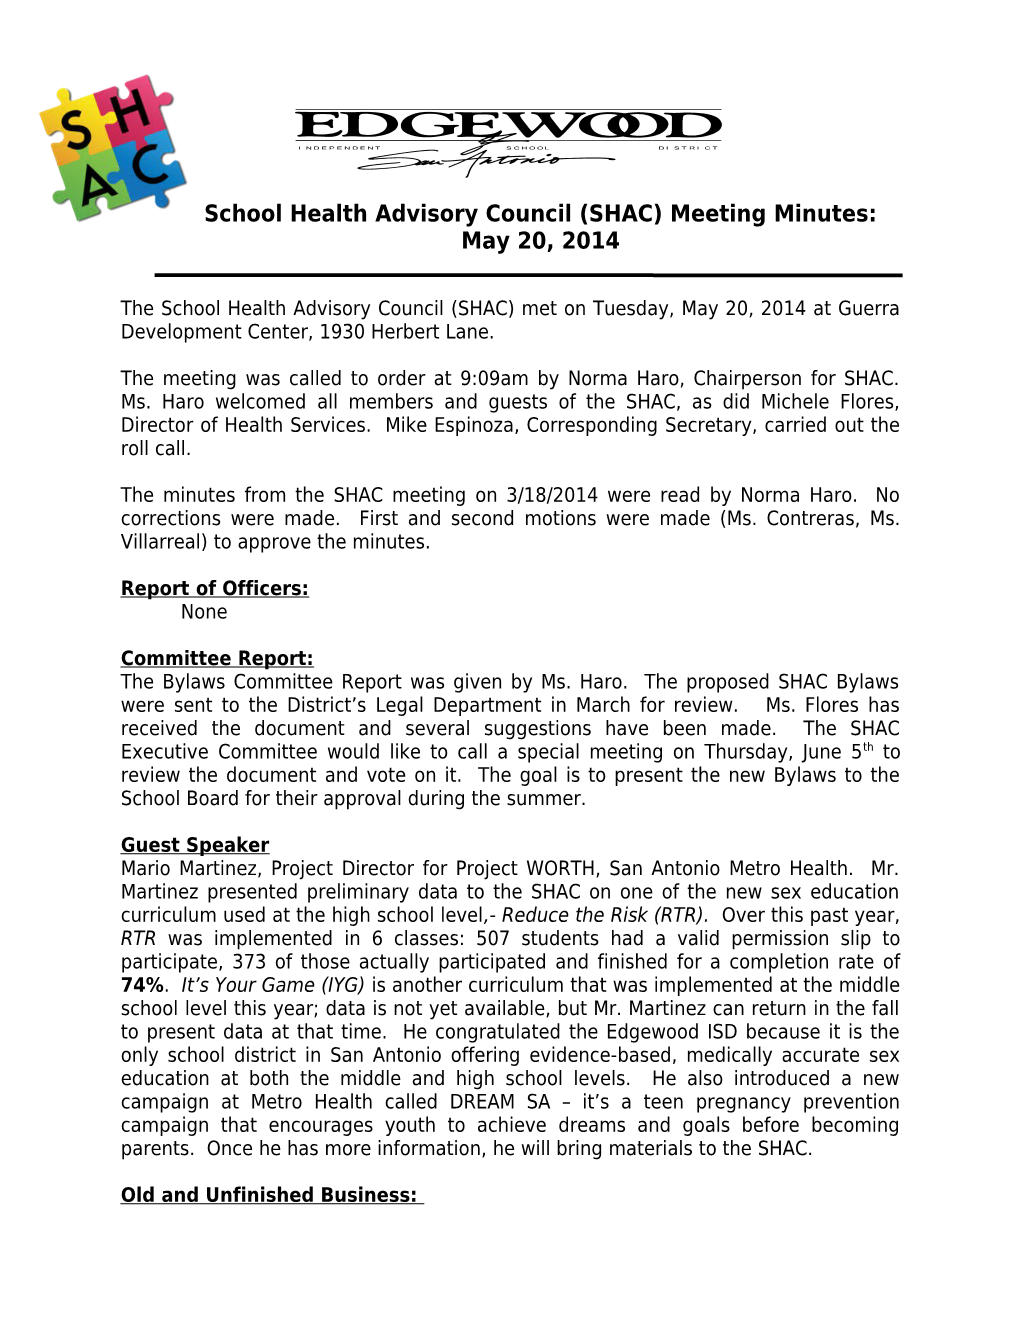 School Health Advisory Council (SHAC) Meeting Minutes: May 20, 2014